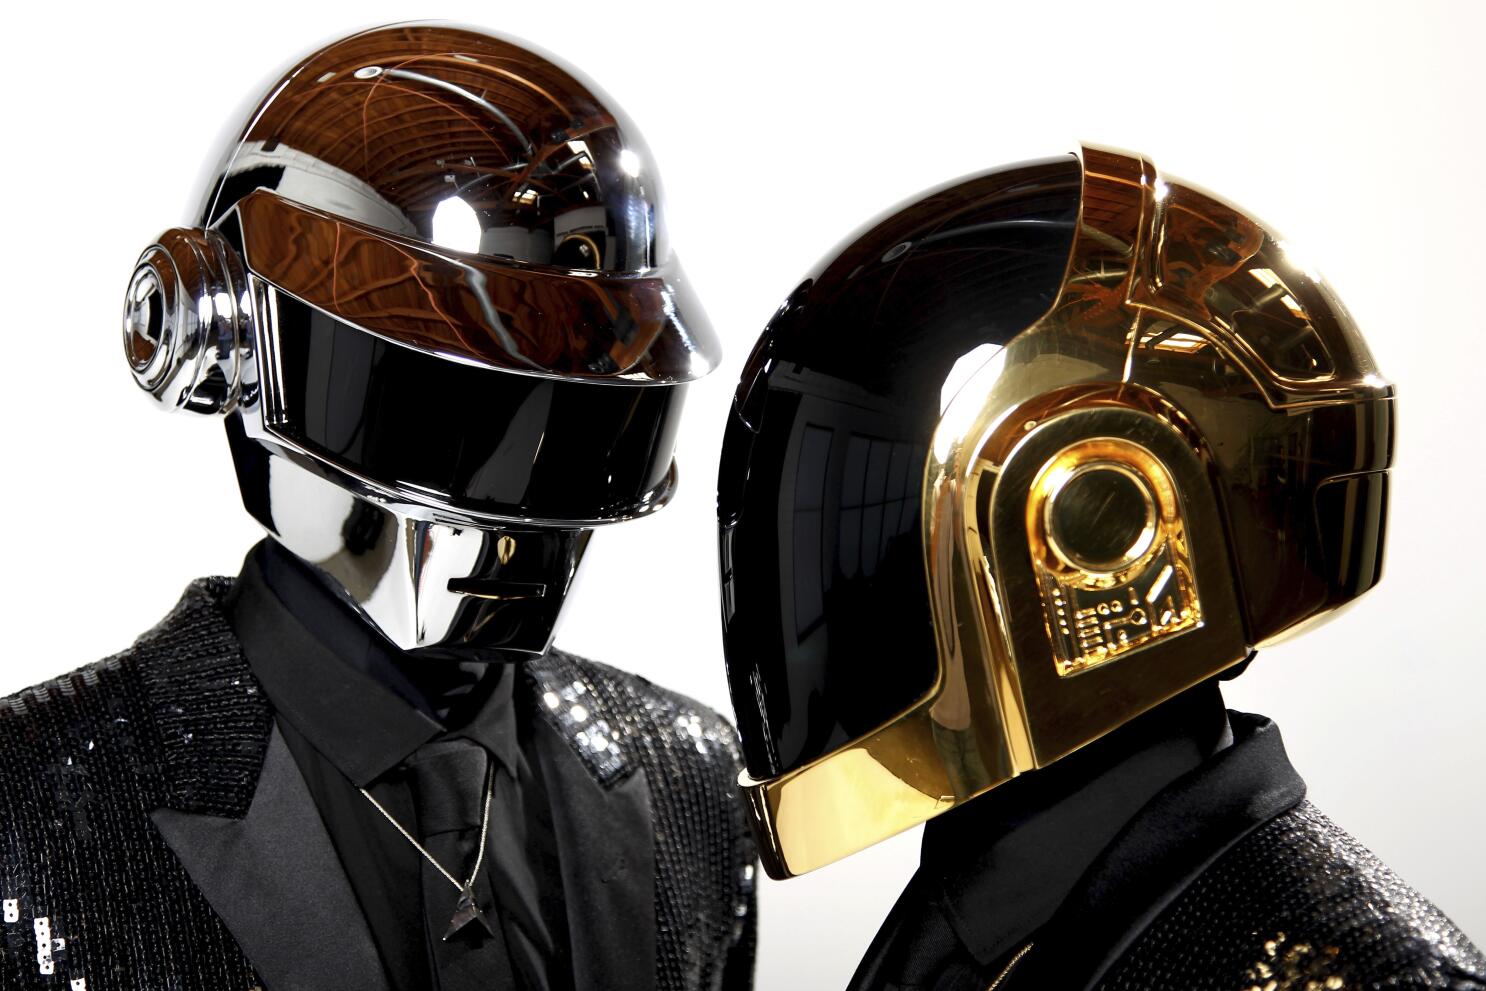 Grammy-winning duo Daft Punk break up after 28 years - The San Diego  Union-Tribune